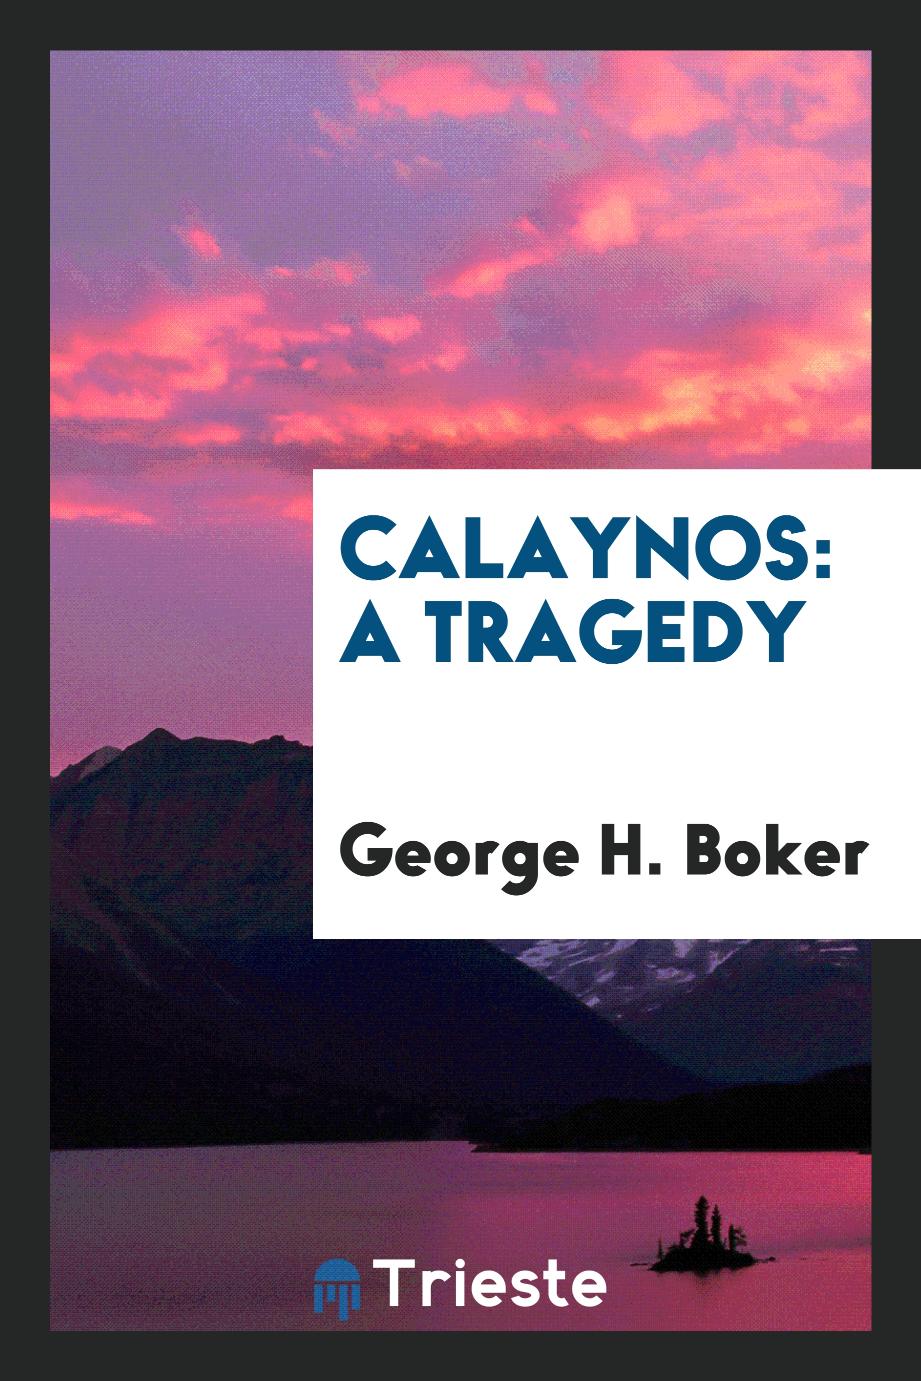 Calaynos: A Tragedy